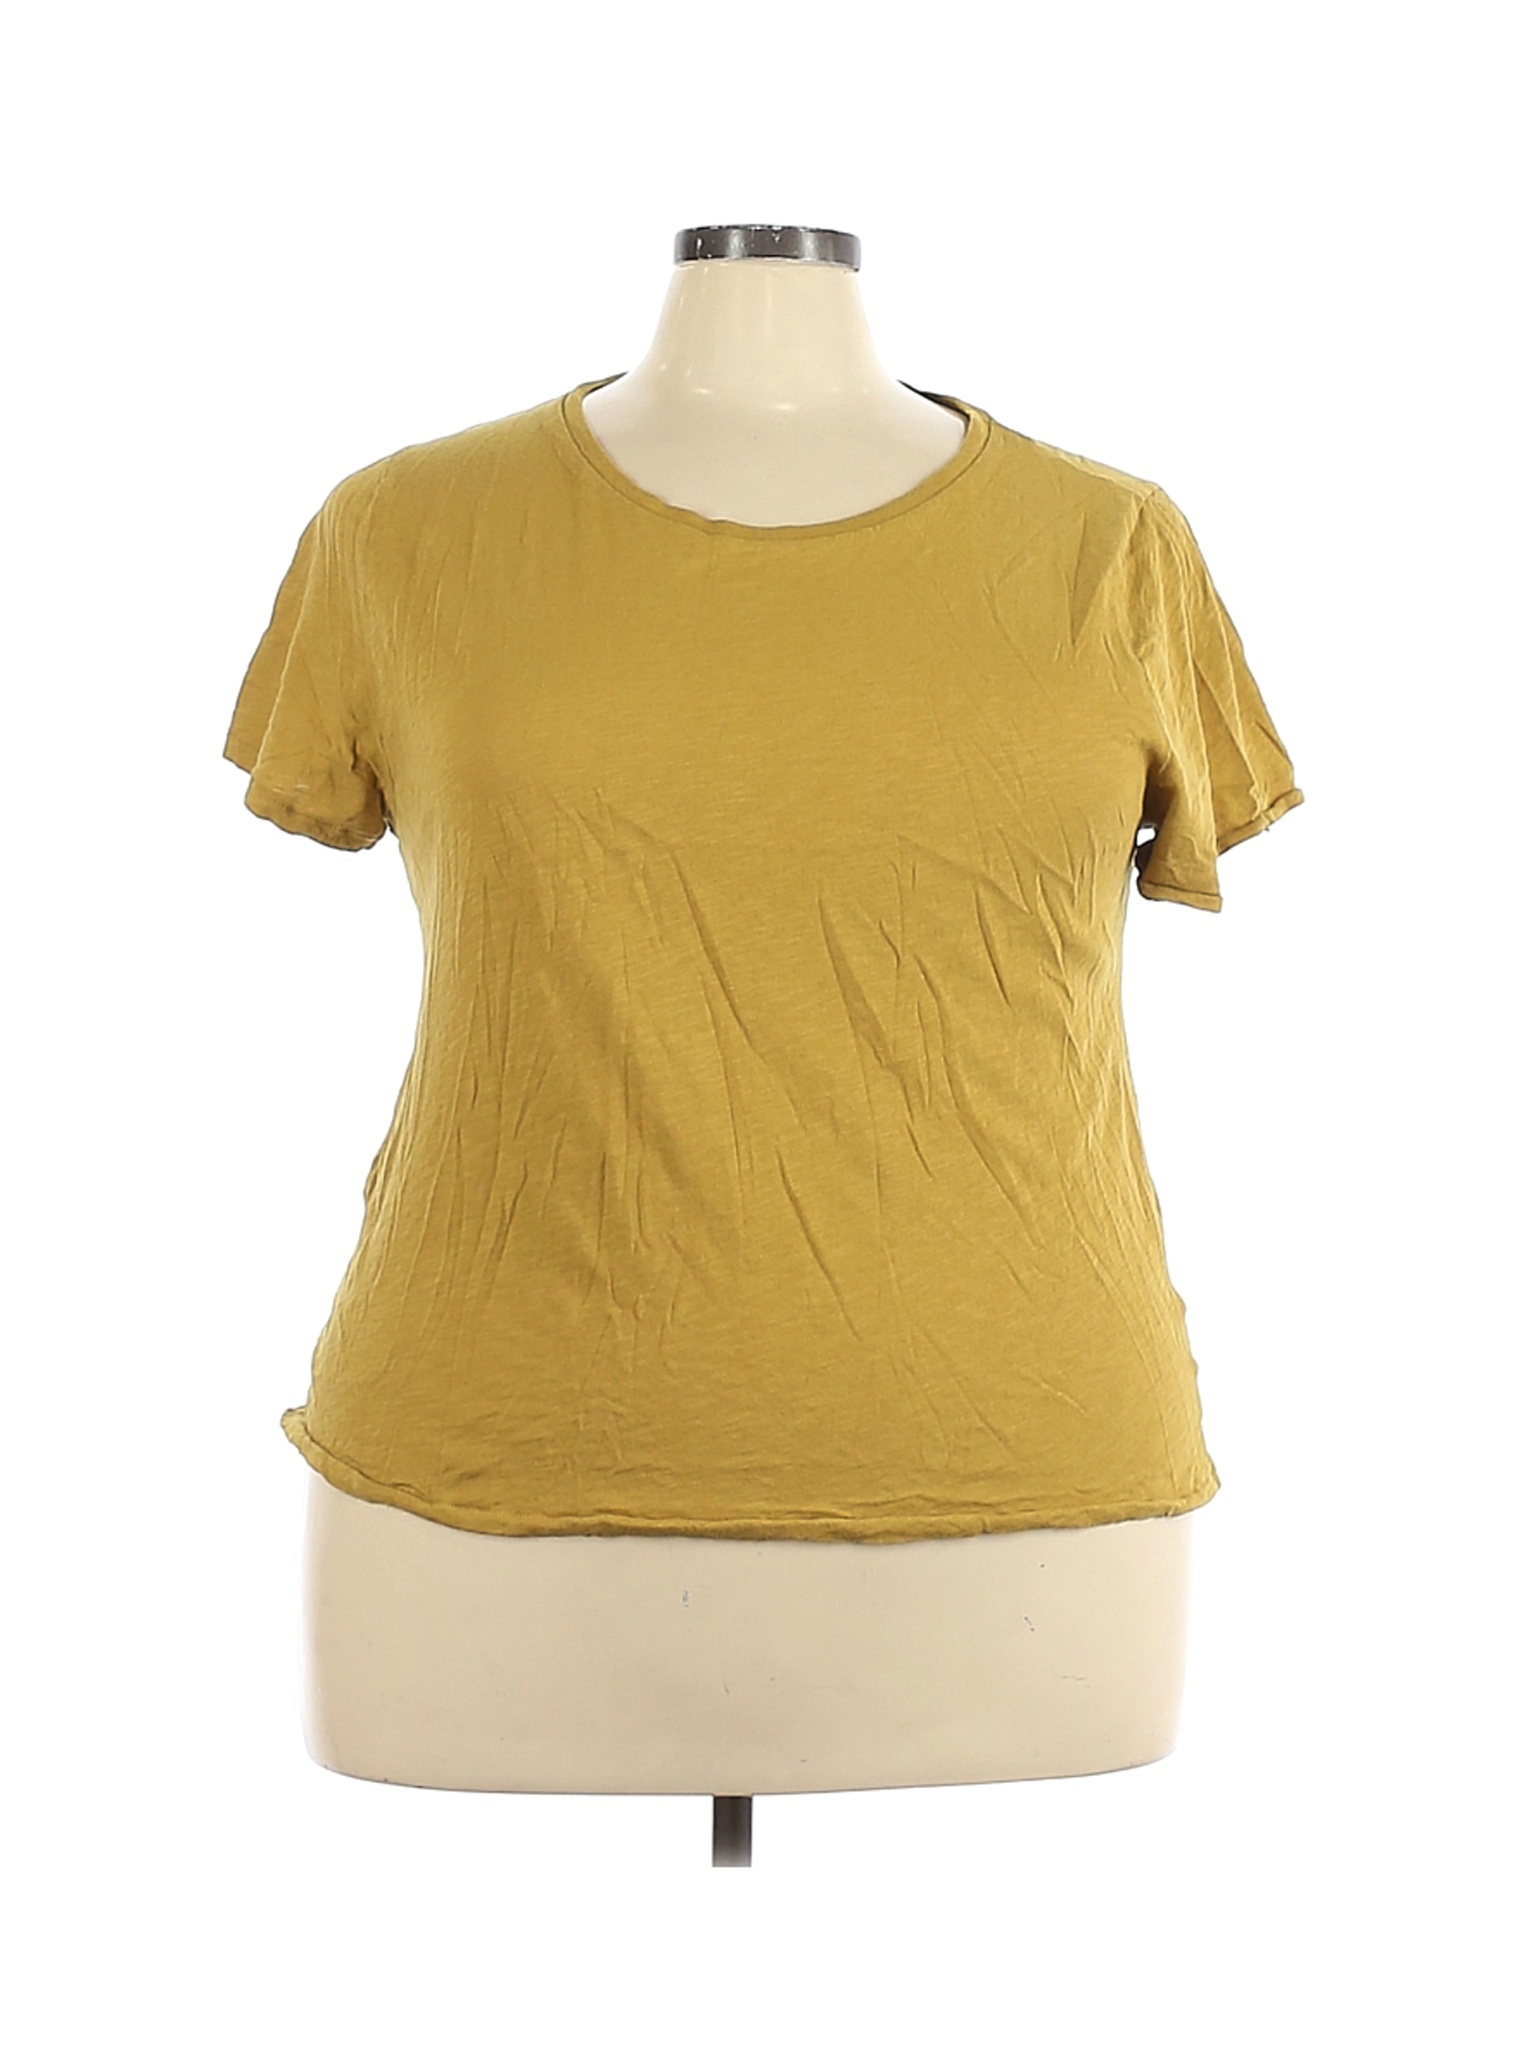 J.Crew Women Yellow Short Sleeve T-Shirt 3X Plus | eBay